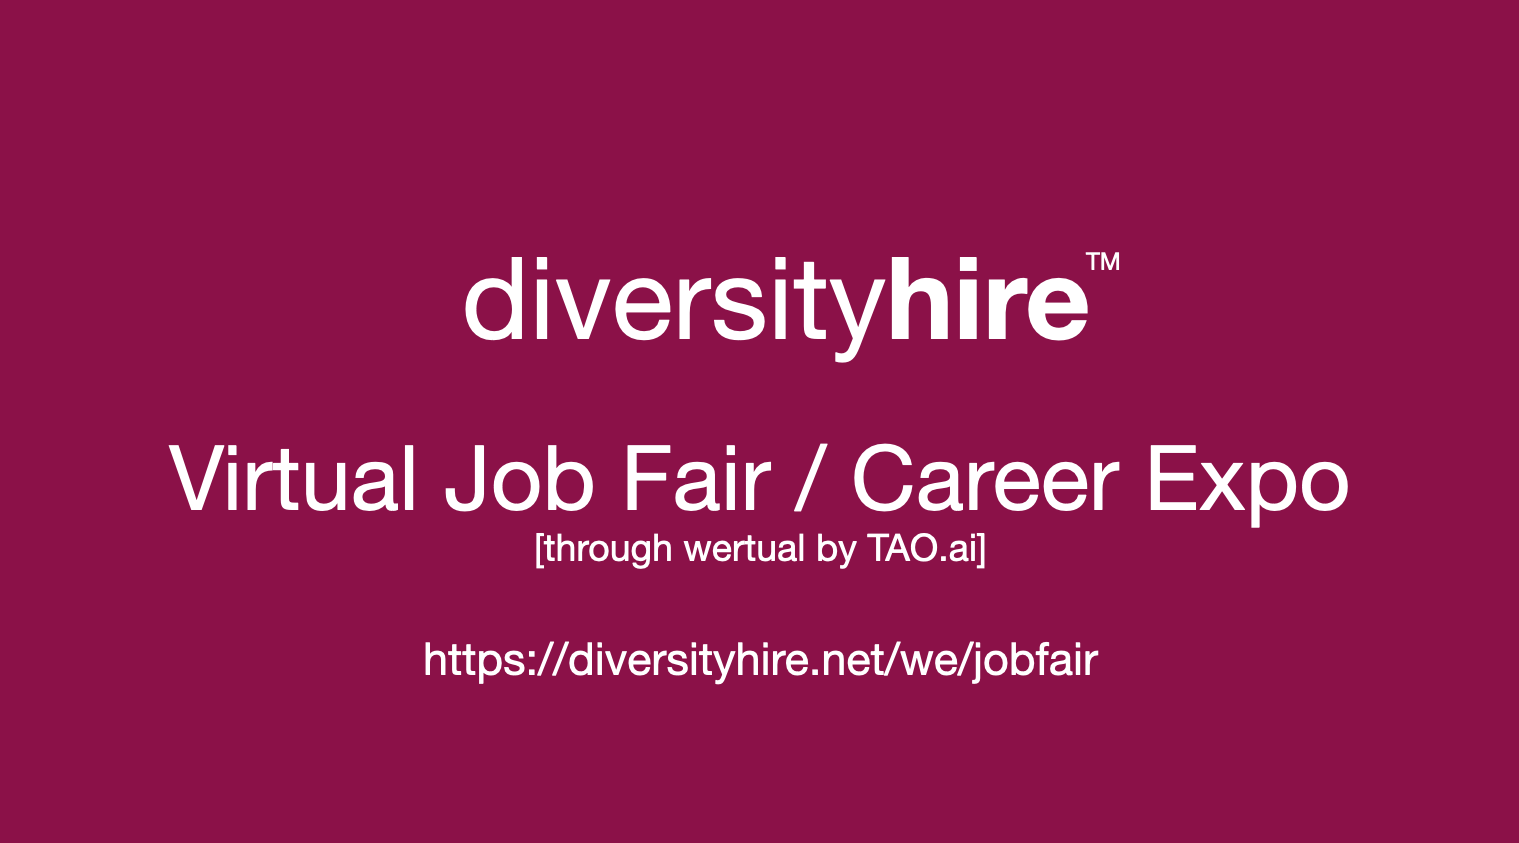 #DiversityHire Virtual Job Fair / Career Expo #Diversity Event #Las Vegas